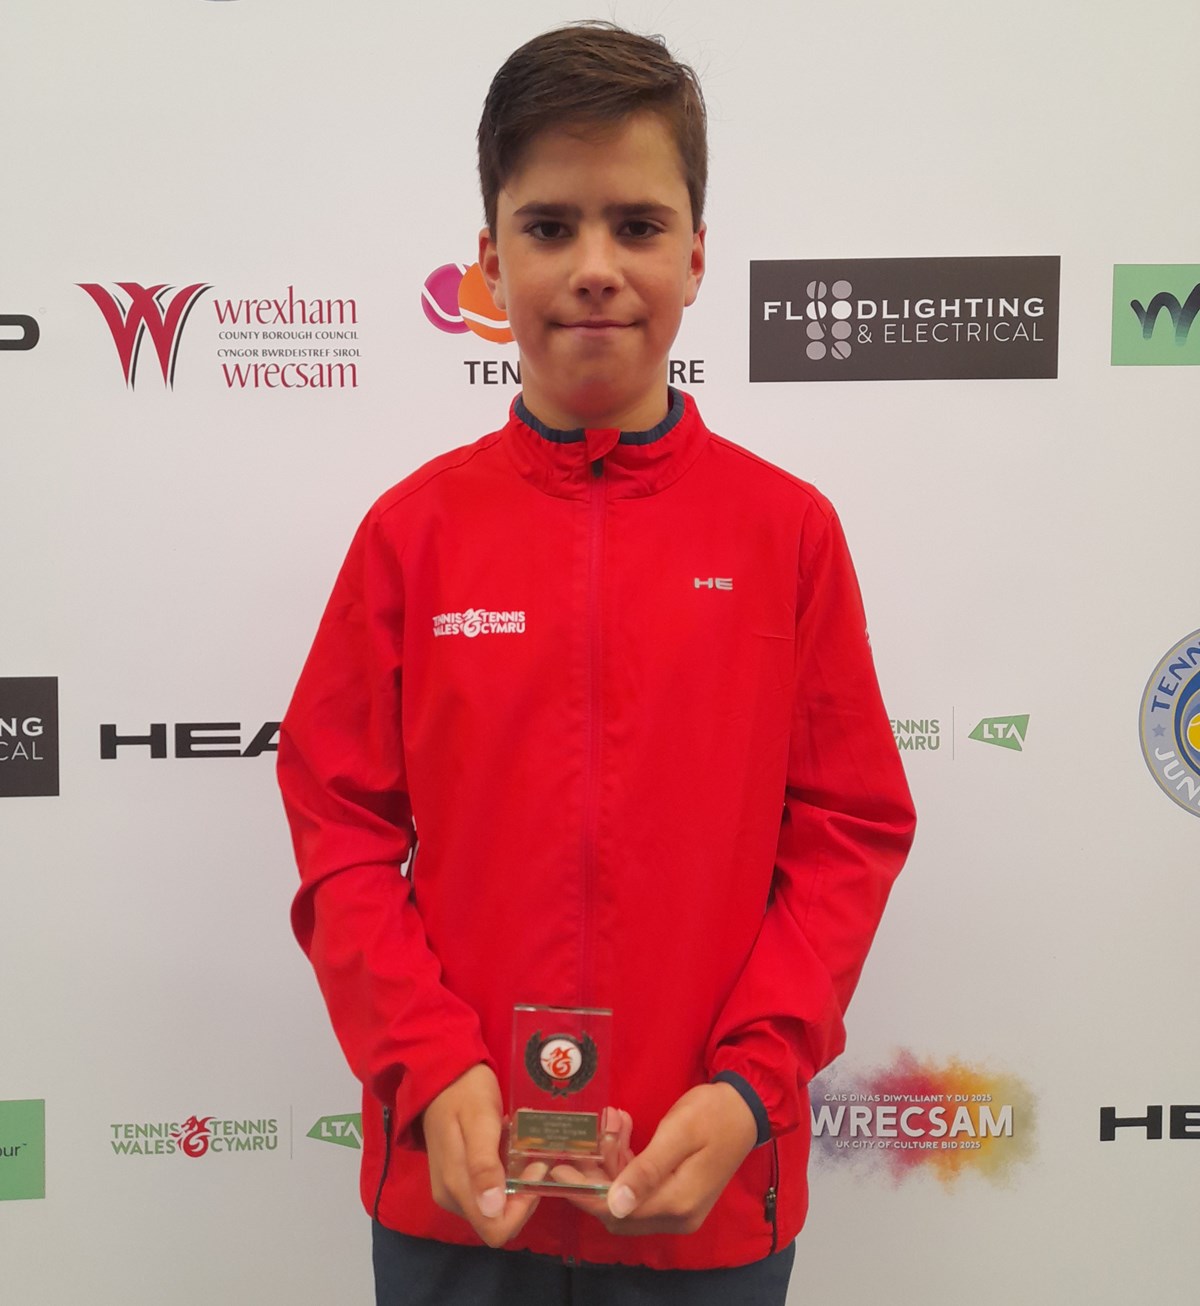 Boy with tennis trophy